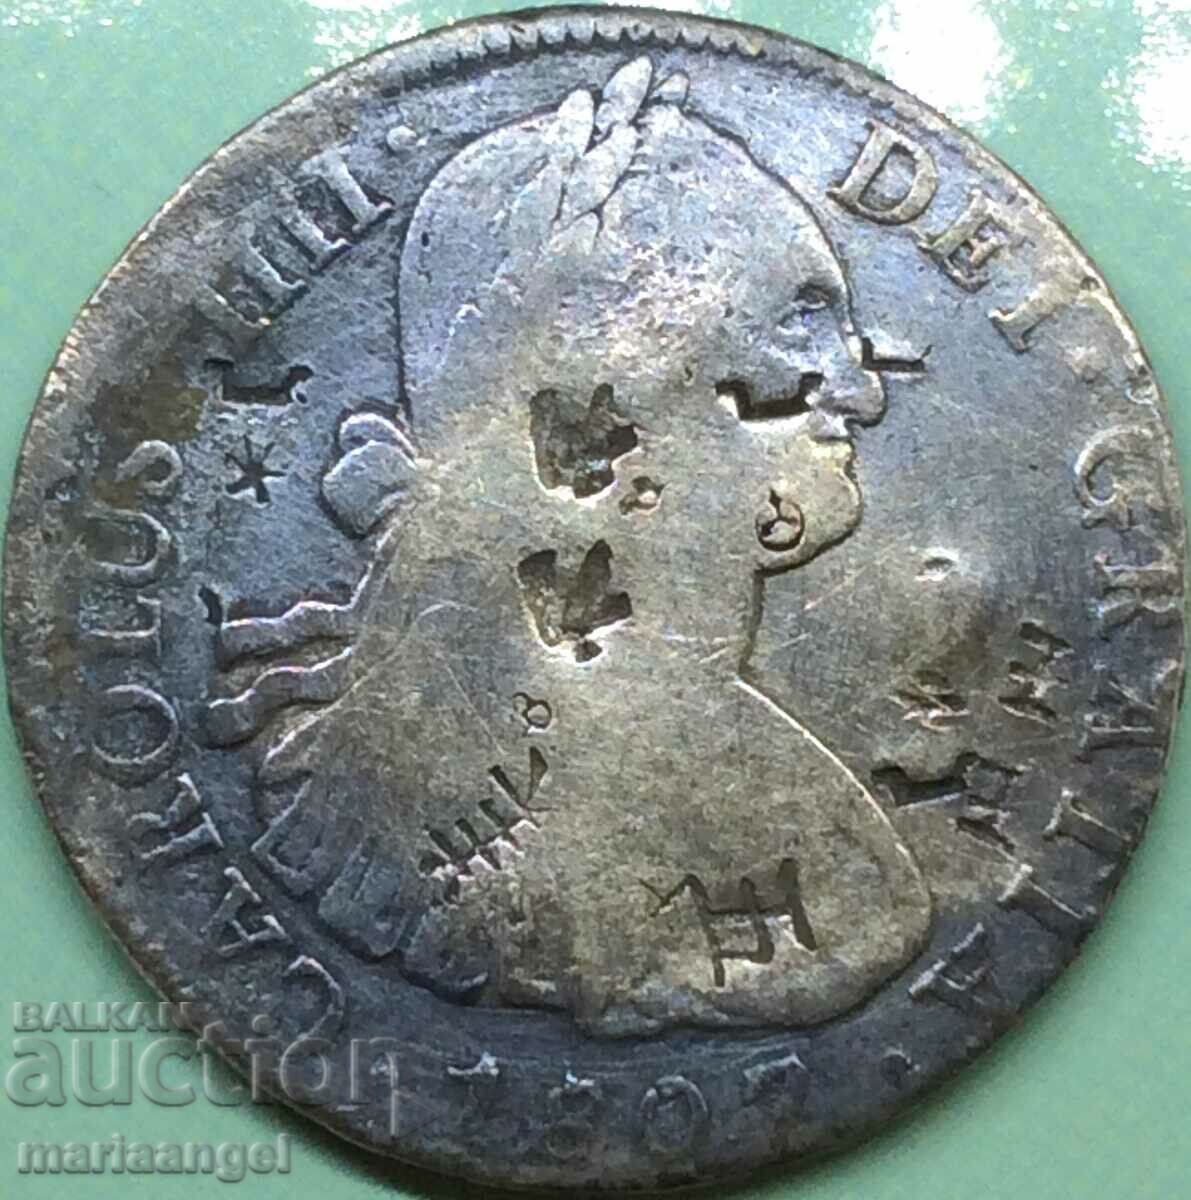 Thaler 8 reales 1807 Silver Spain Colony Mexico Rare !